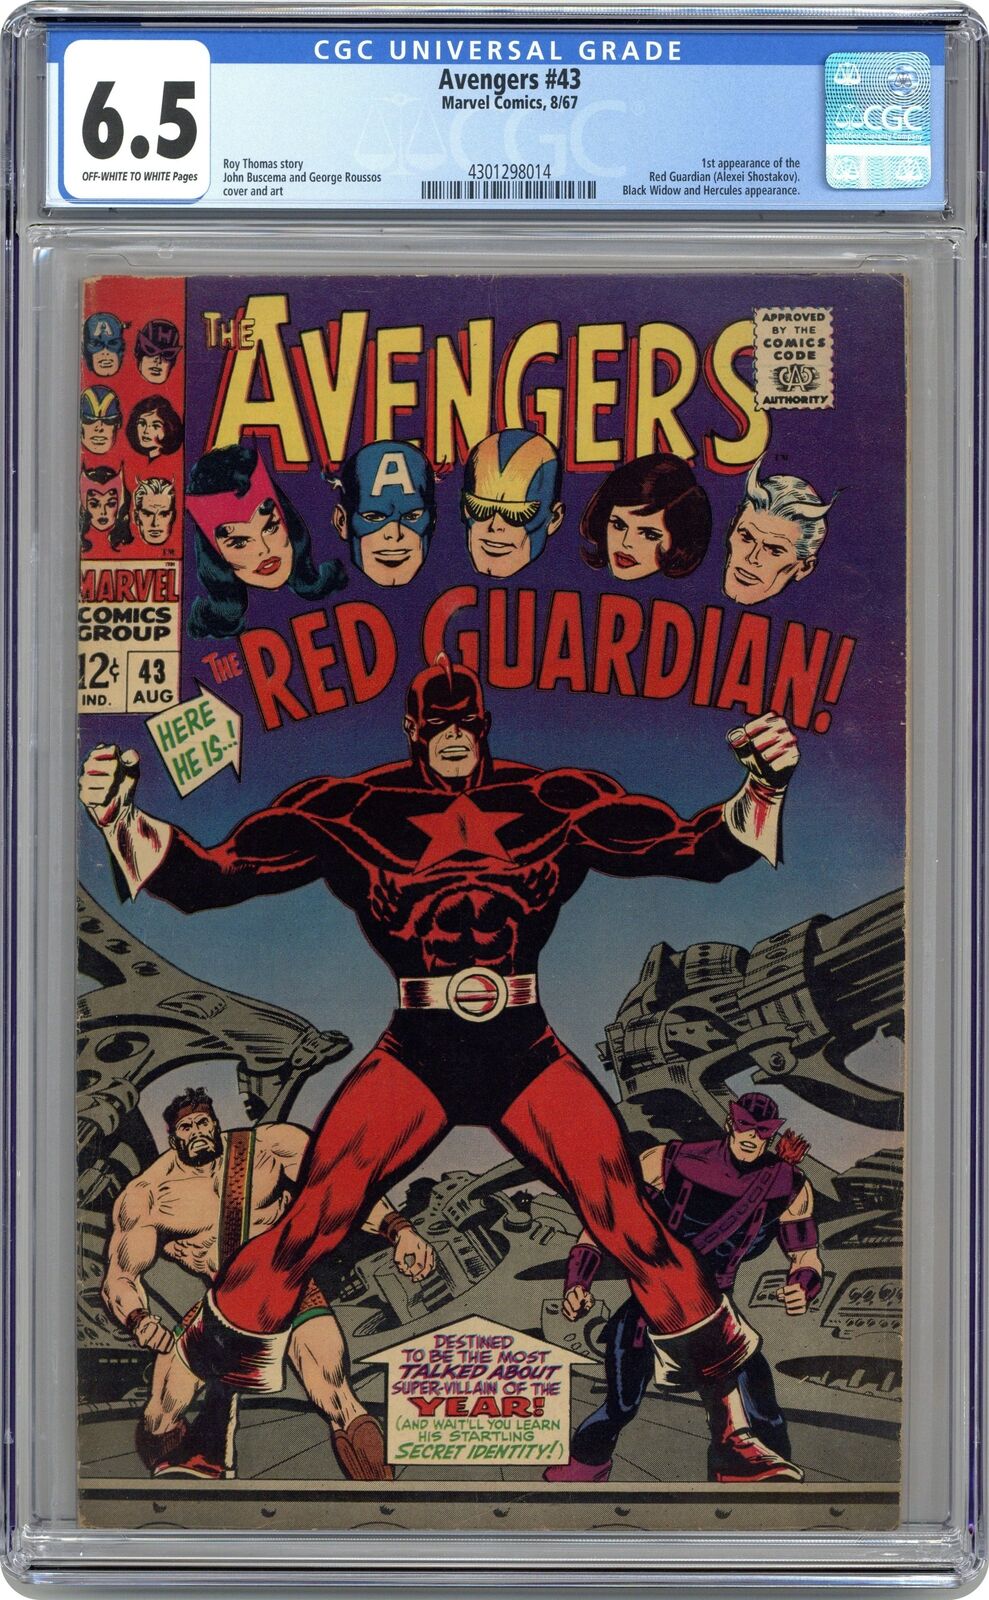 Avengers #43 CGC 6.5 1967 4301298014 1st app. Red Guardian